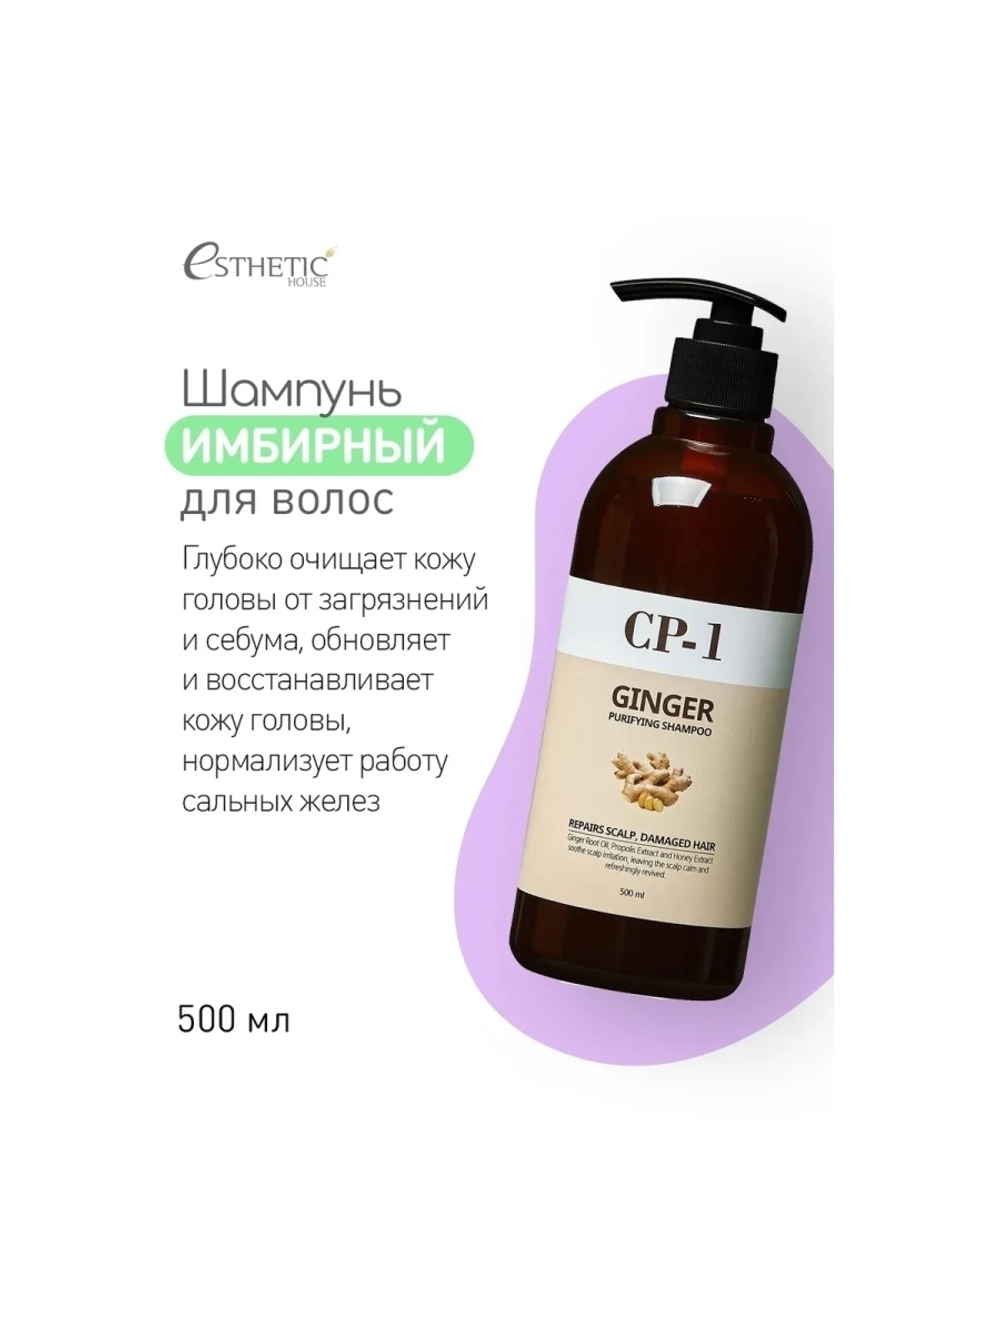 Шампунь для волос имбирный - Esthetic House CP-1 ginger purifying shampoo, 500 мл